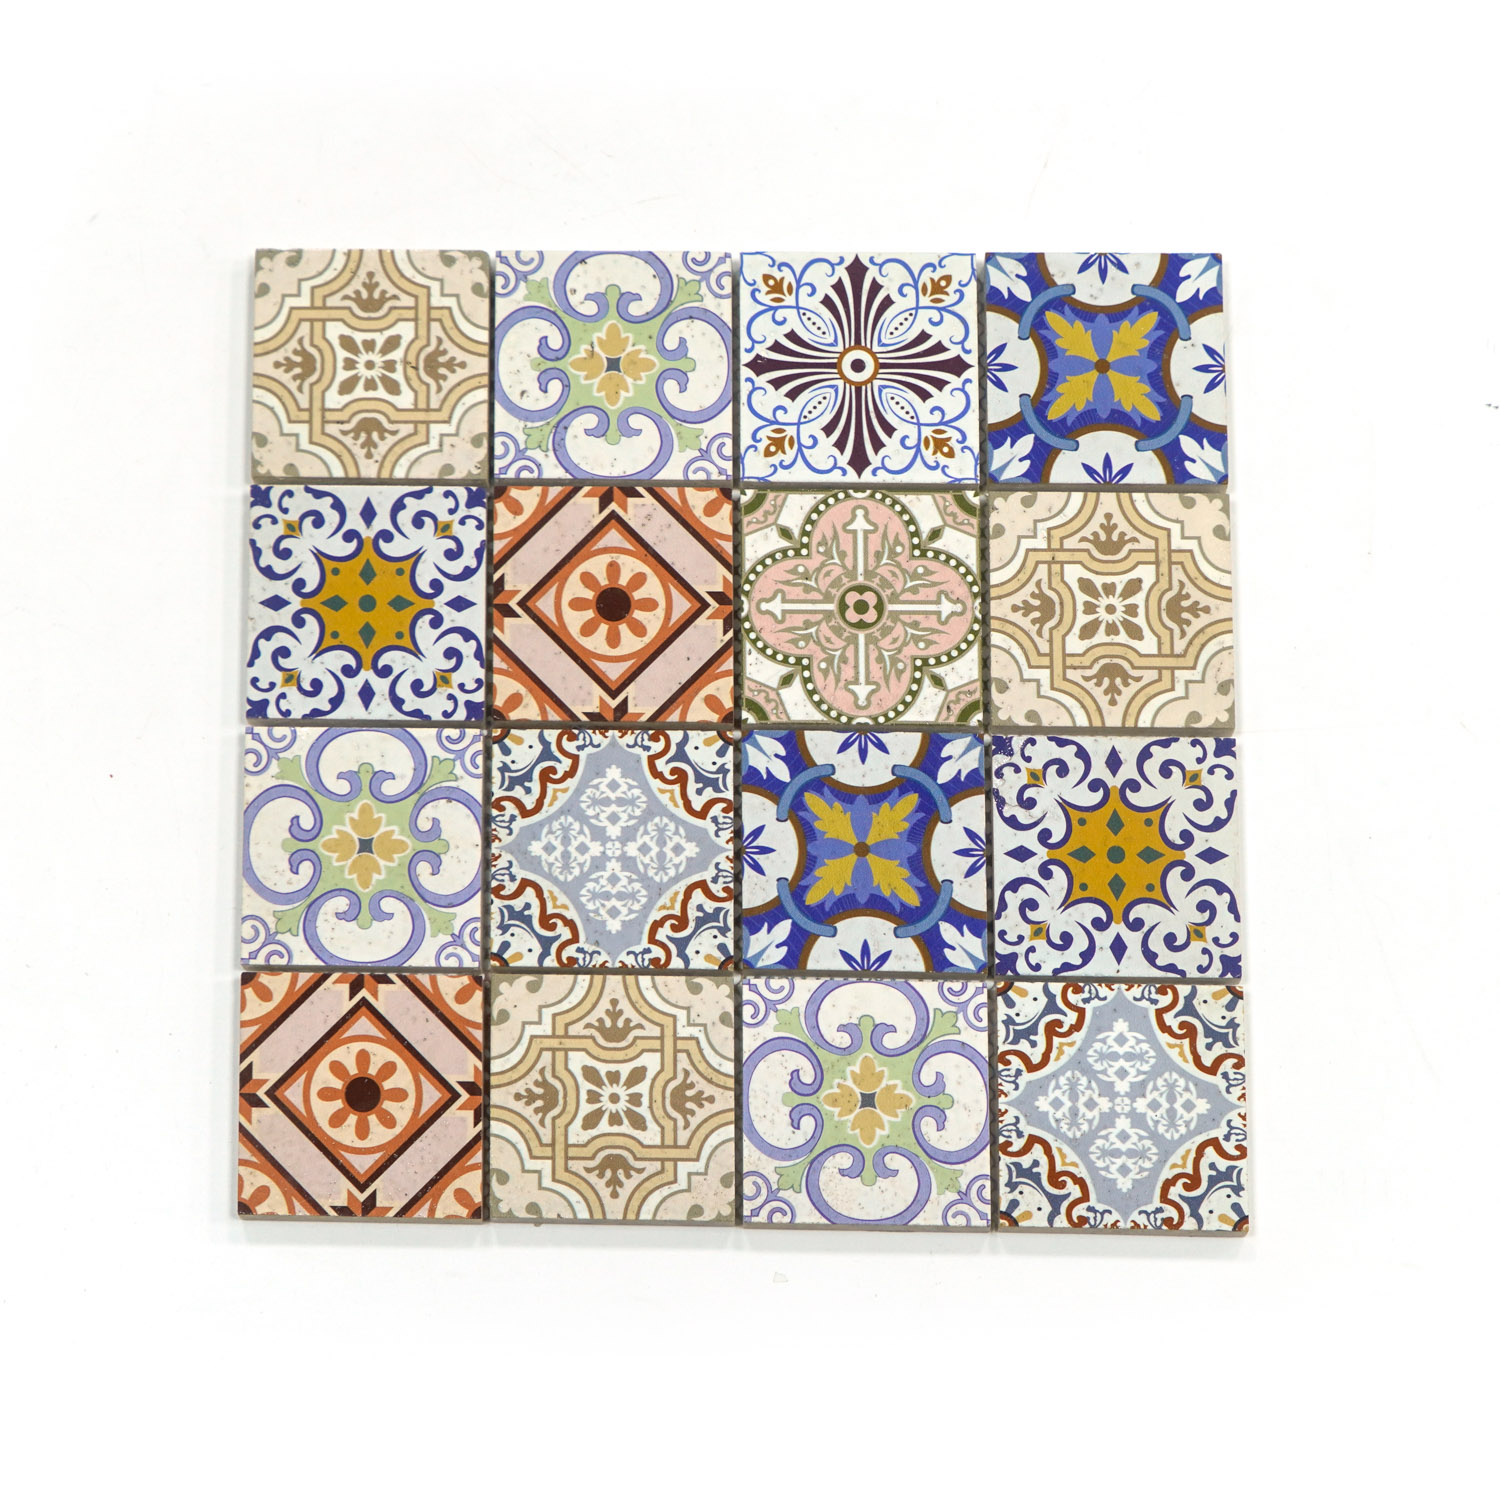 Hot selling Inkjet Printing Marble Stone Mosaic Kitchen Tiles For Backsplash Featured Image